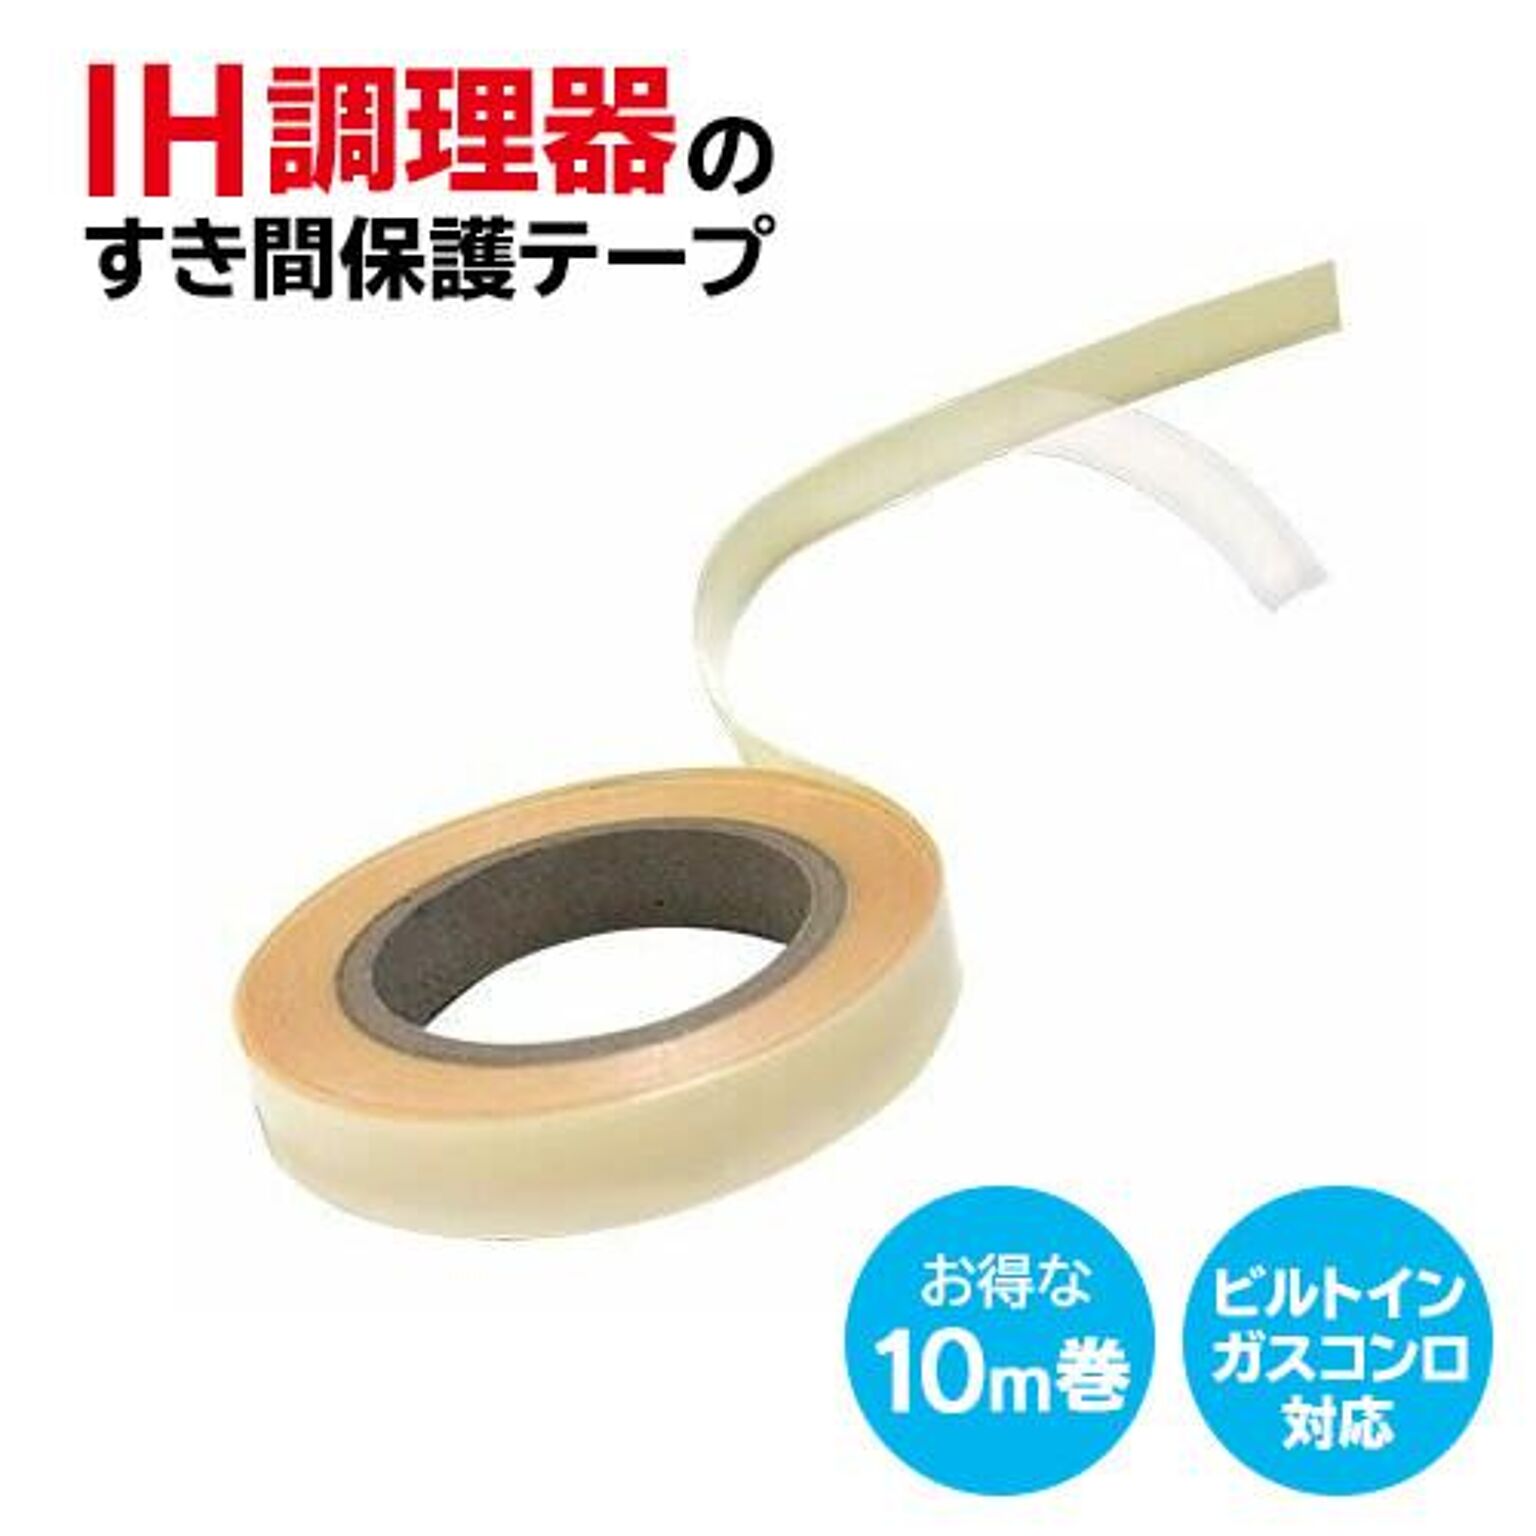 【▲】/IH調理器のすきま保護テープ